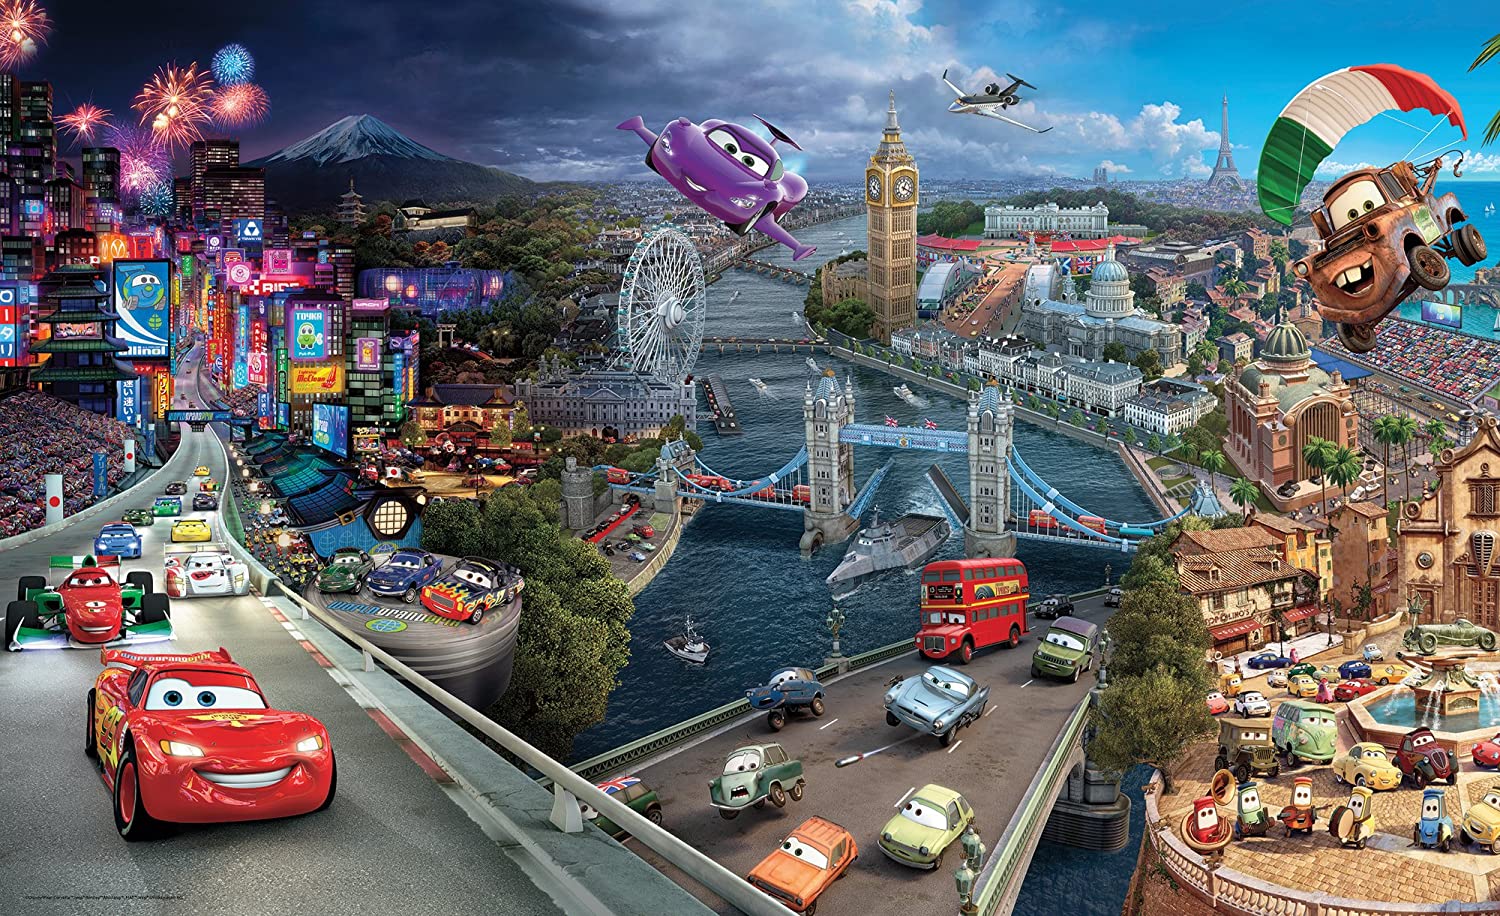 Disney Pixar Cars World Wallpaper, 4 012 P8: Amazon.ca: Home & Kitchen